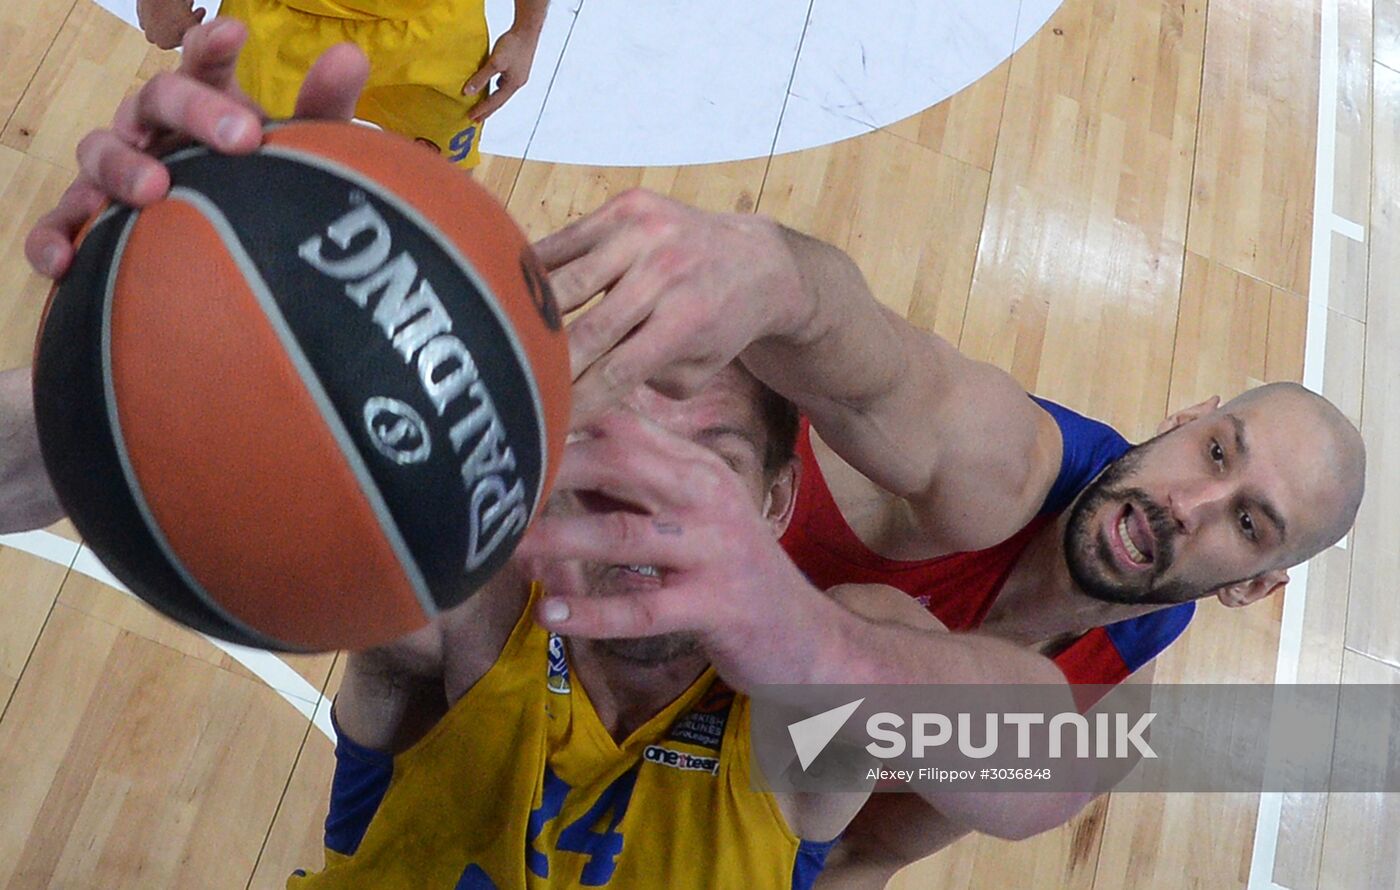 Euroleague Basketball. CSKA vs. Maccabi